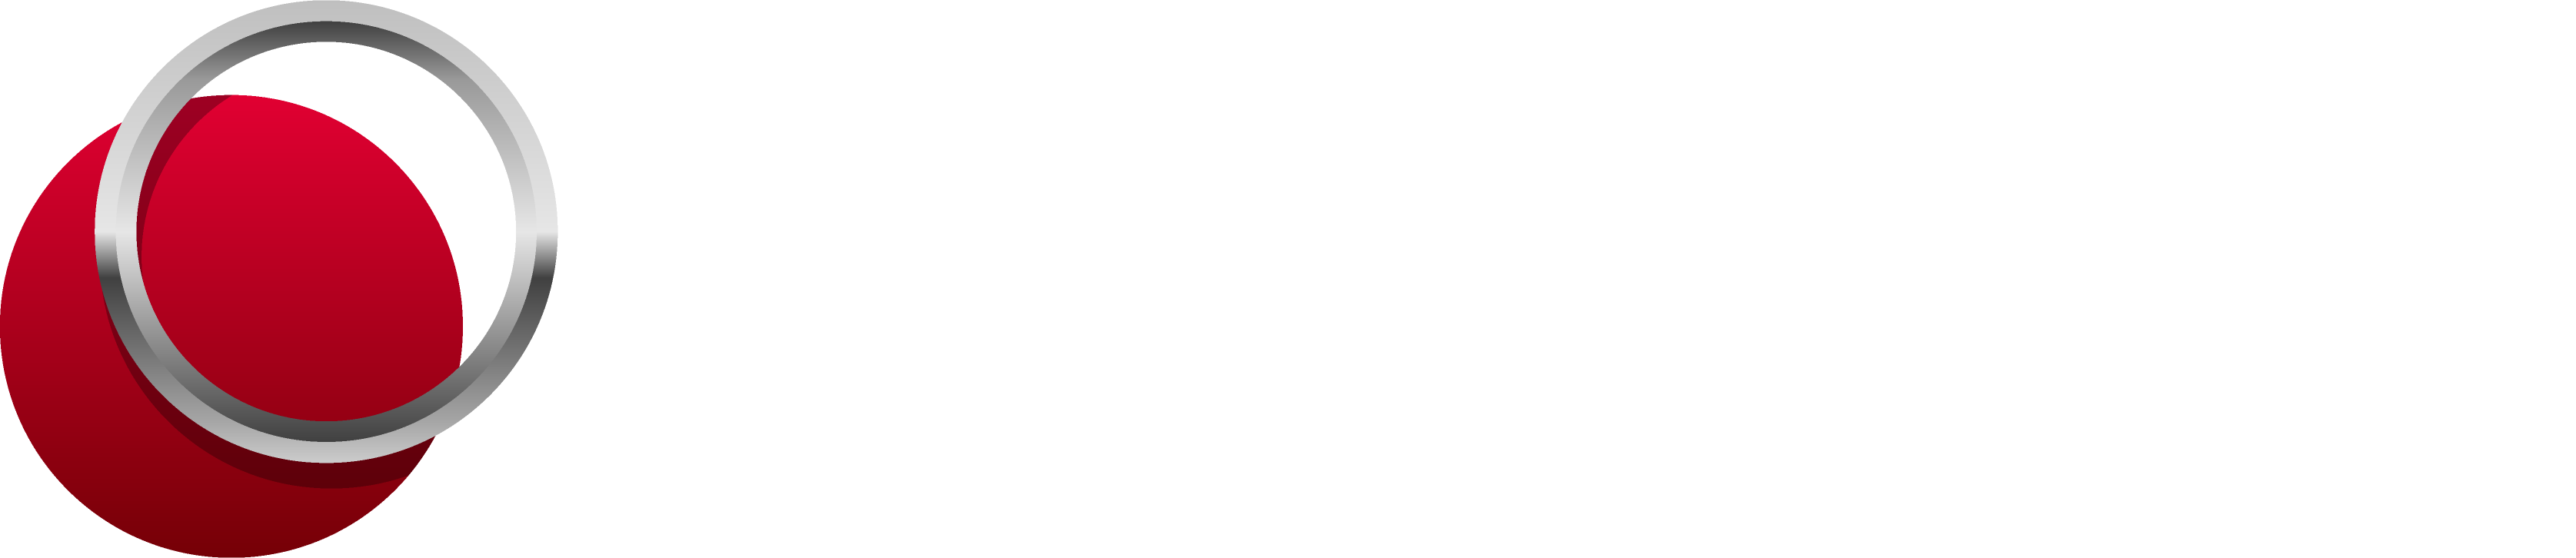 Logo da Empresa